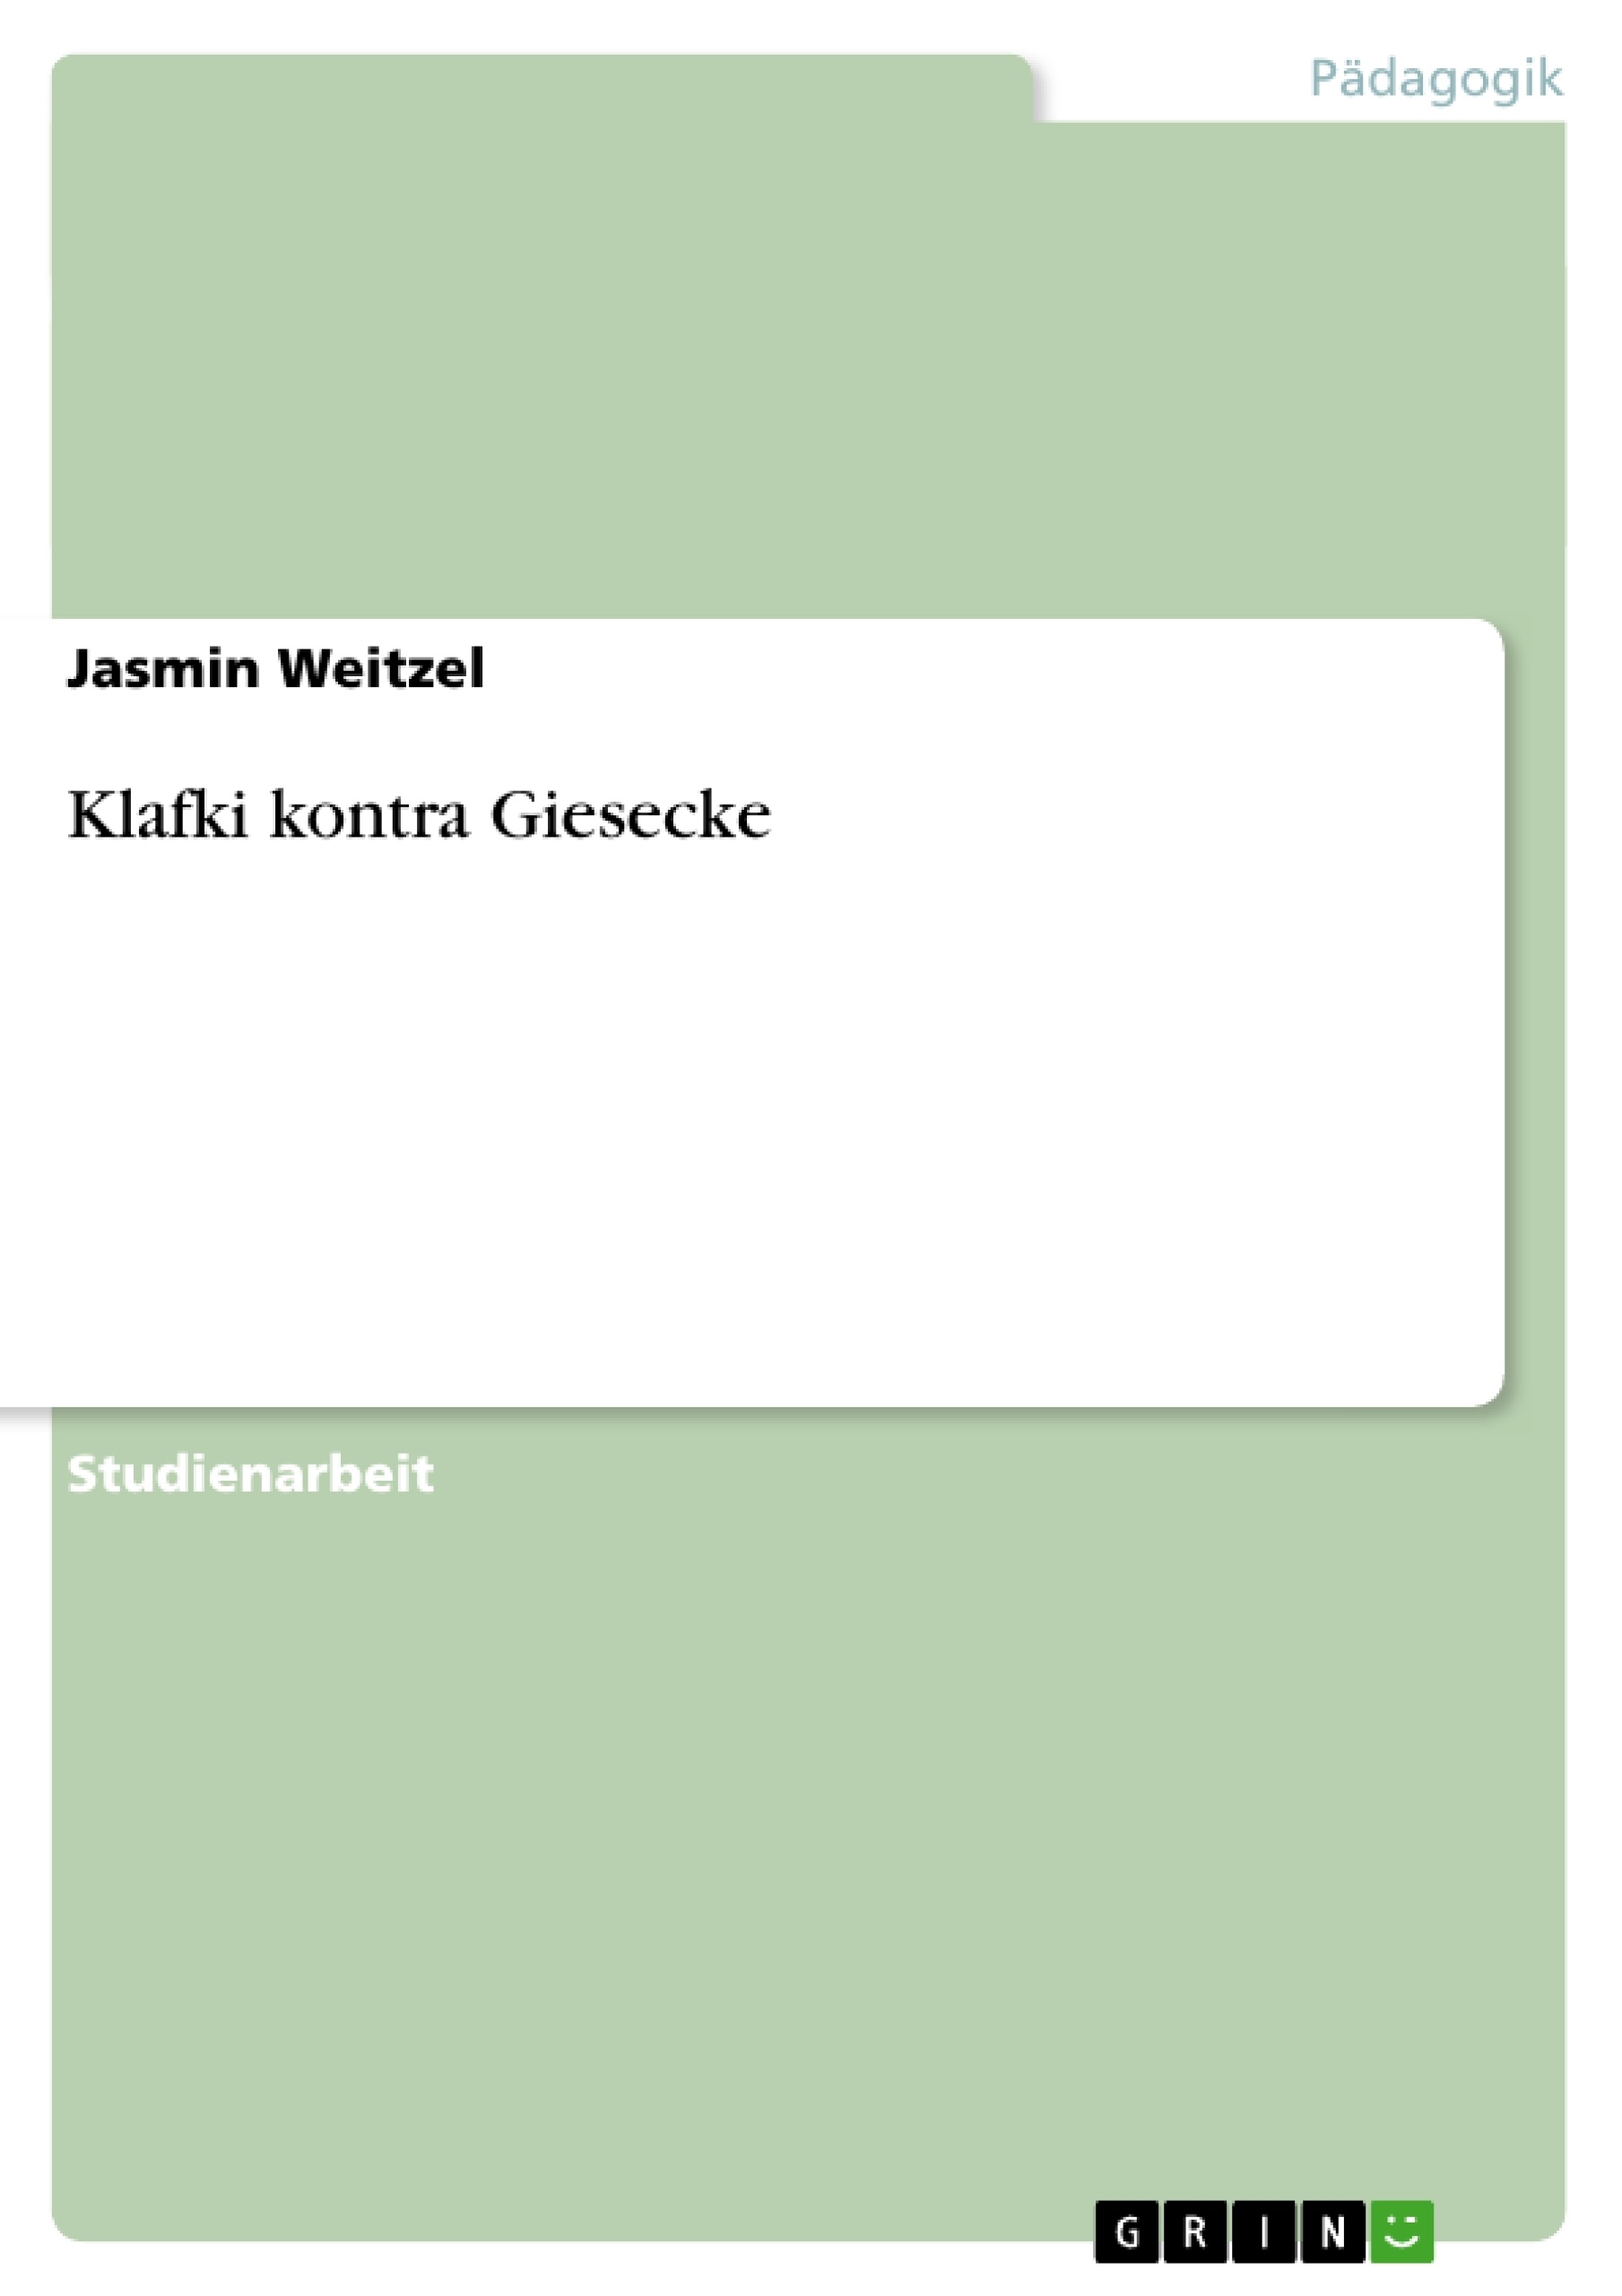 Título: Klafki kontra Giesecke